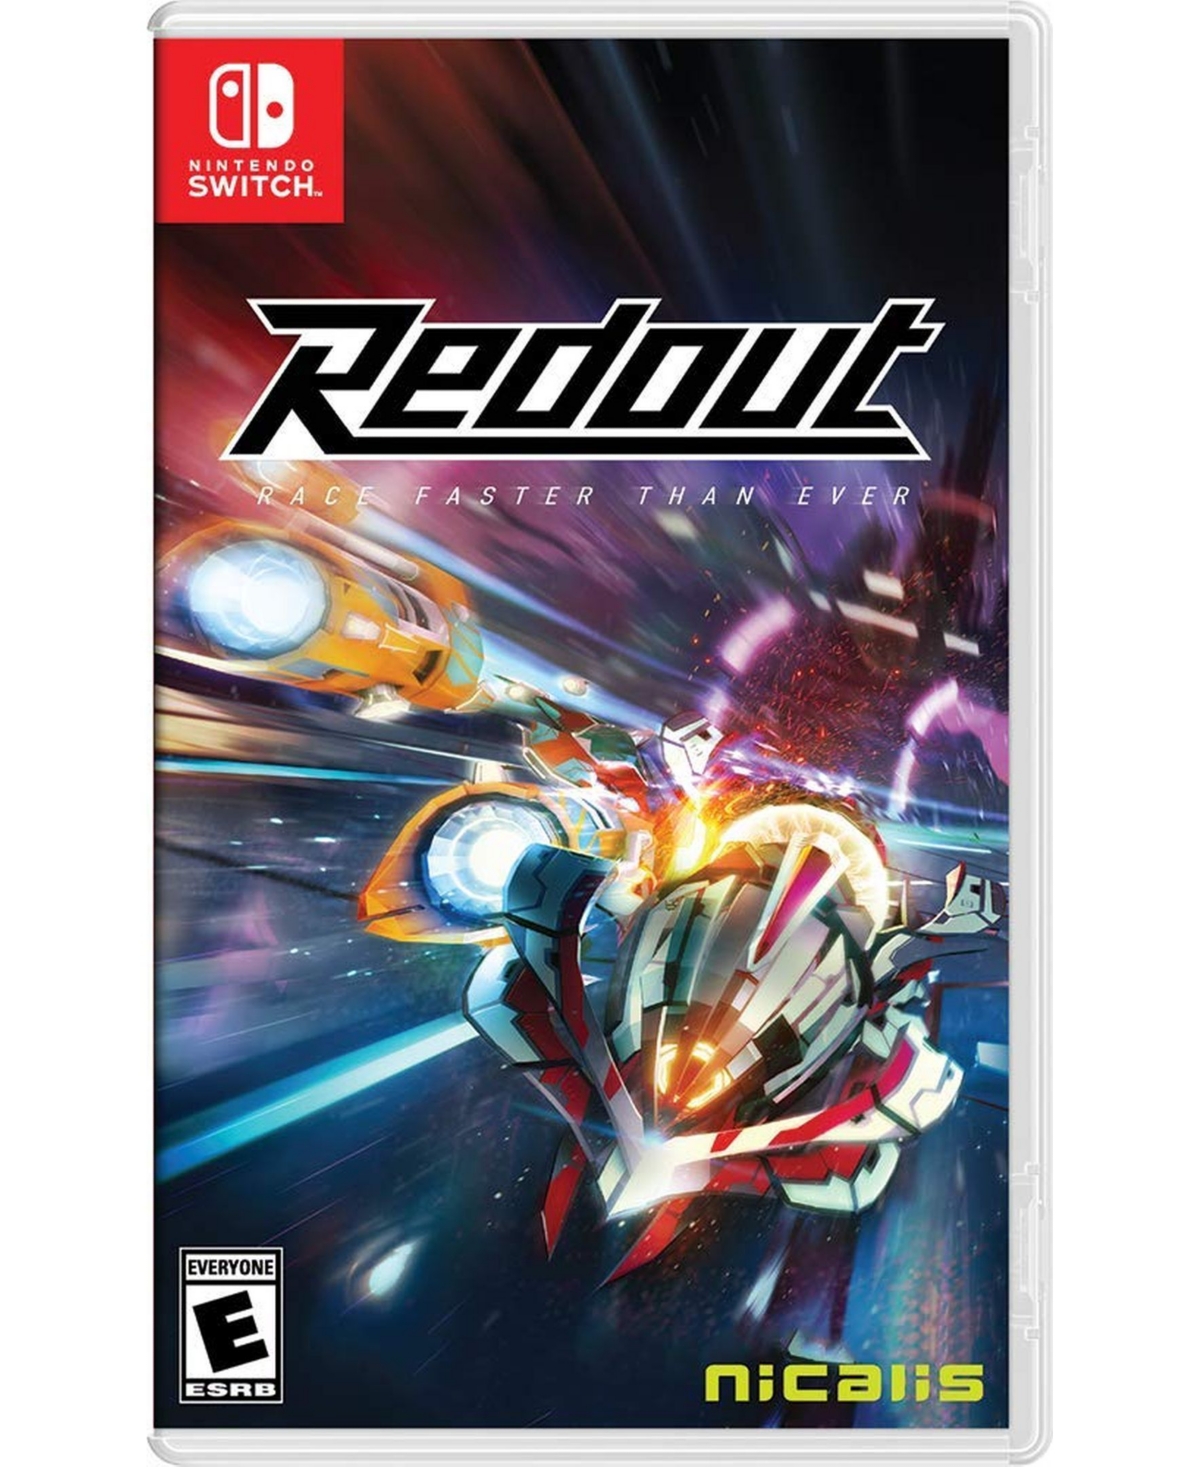 Nintendo Redout - Switch